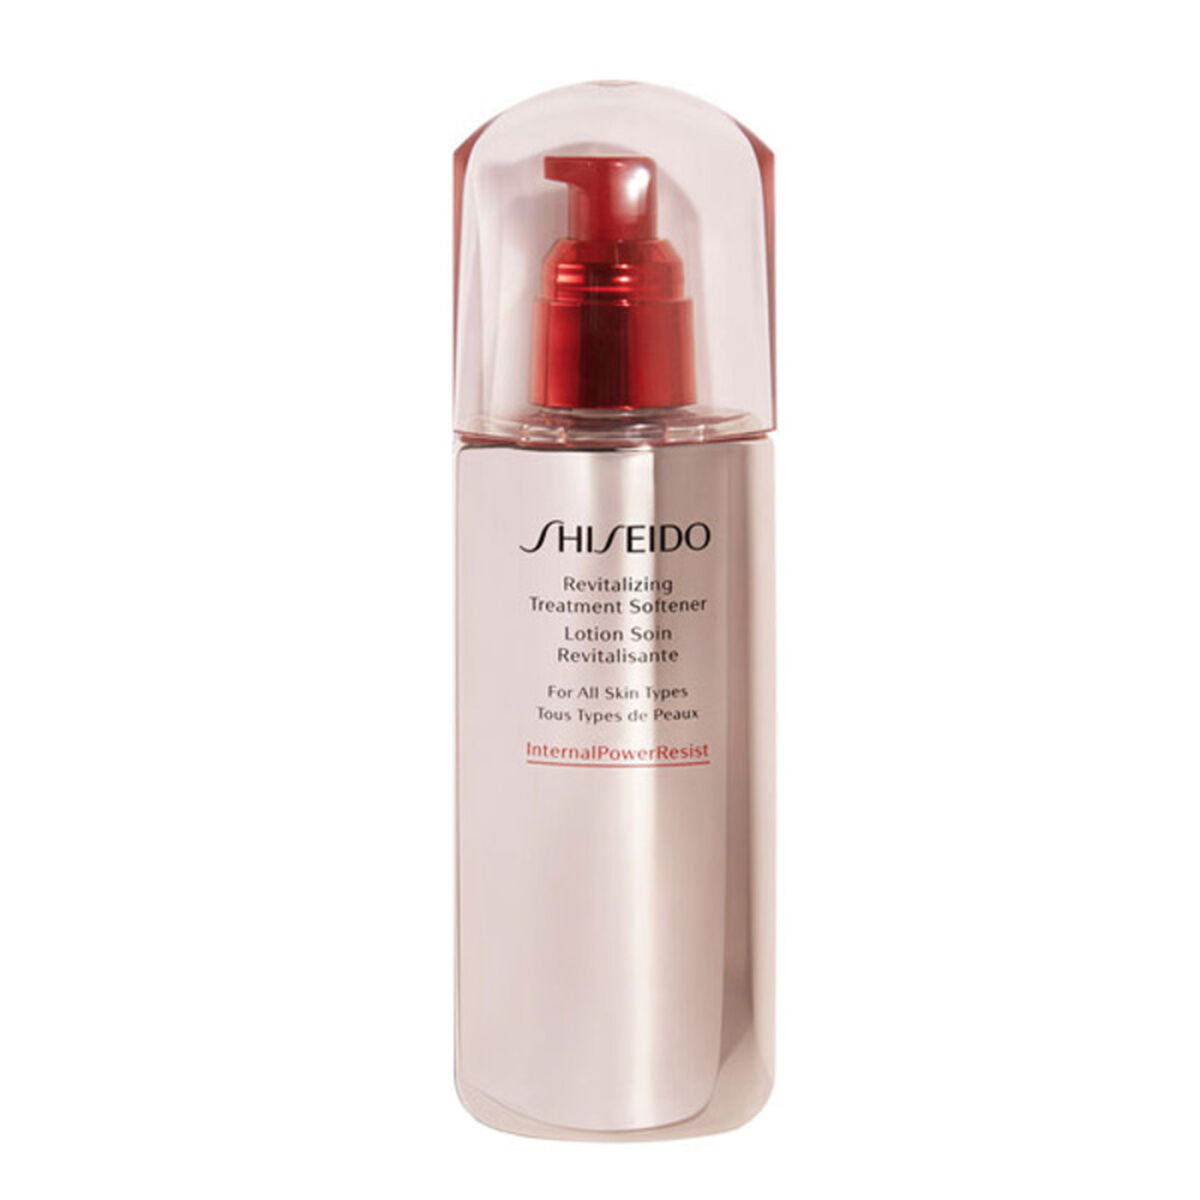 Tonic Facial Anti-aging Defend Skincare Shiseido